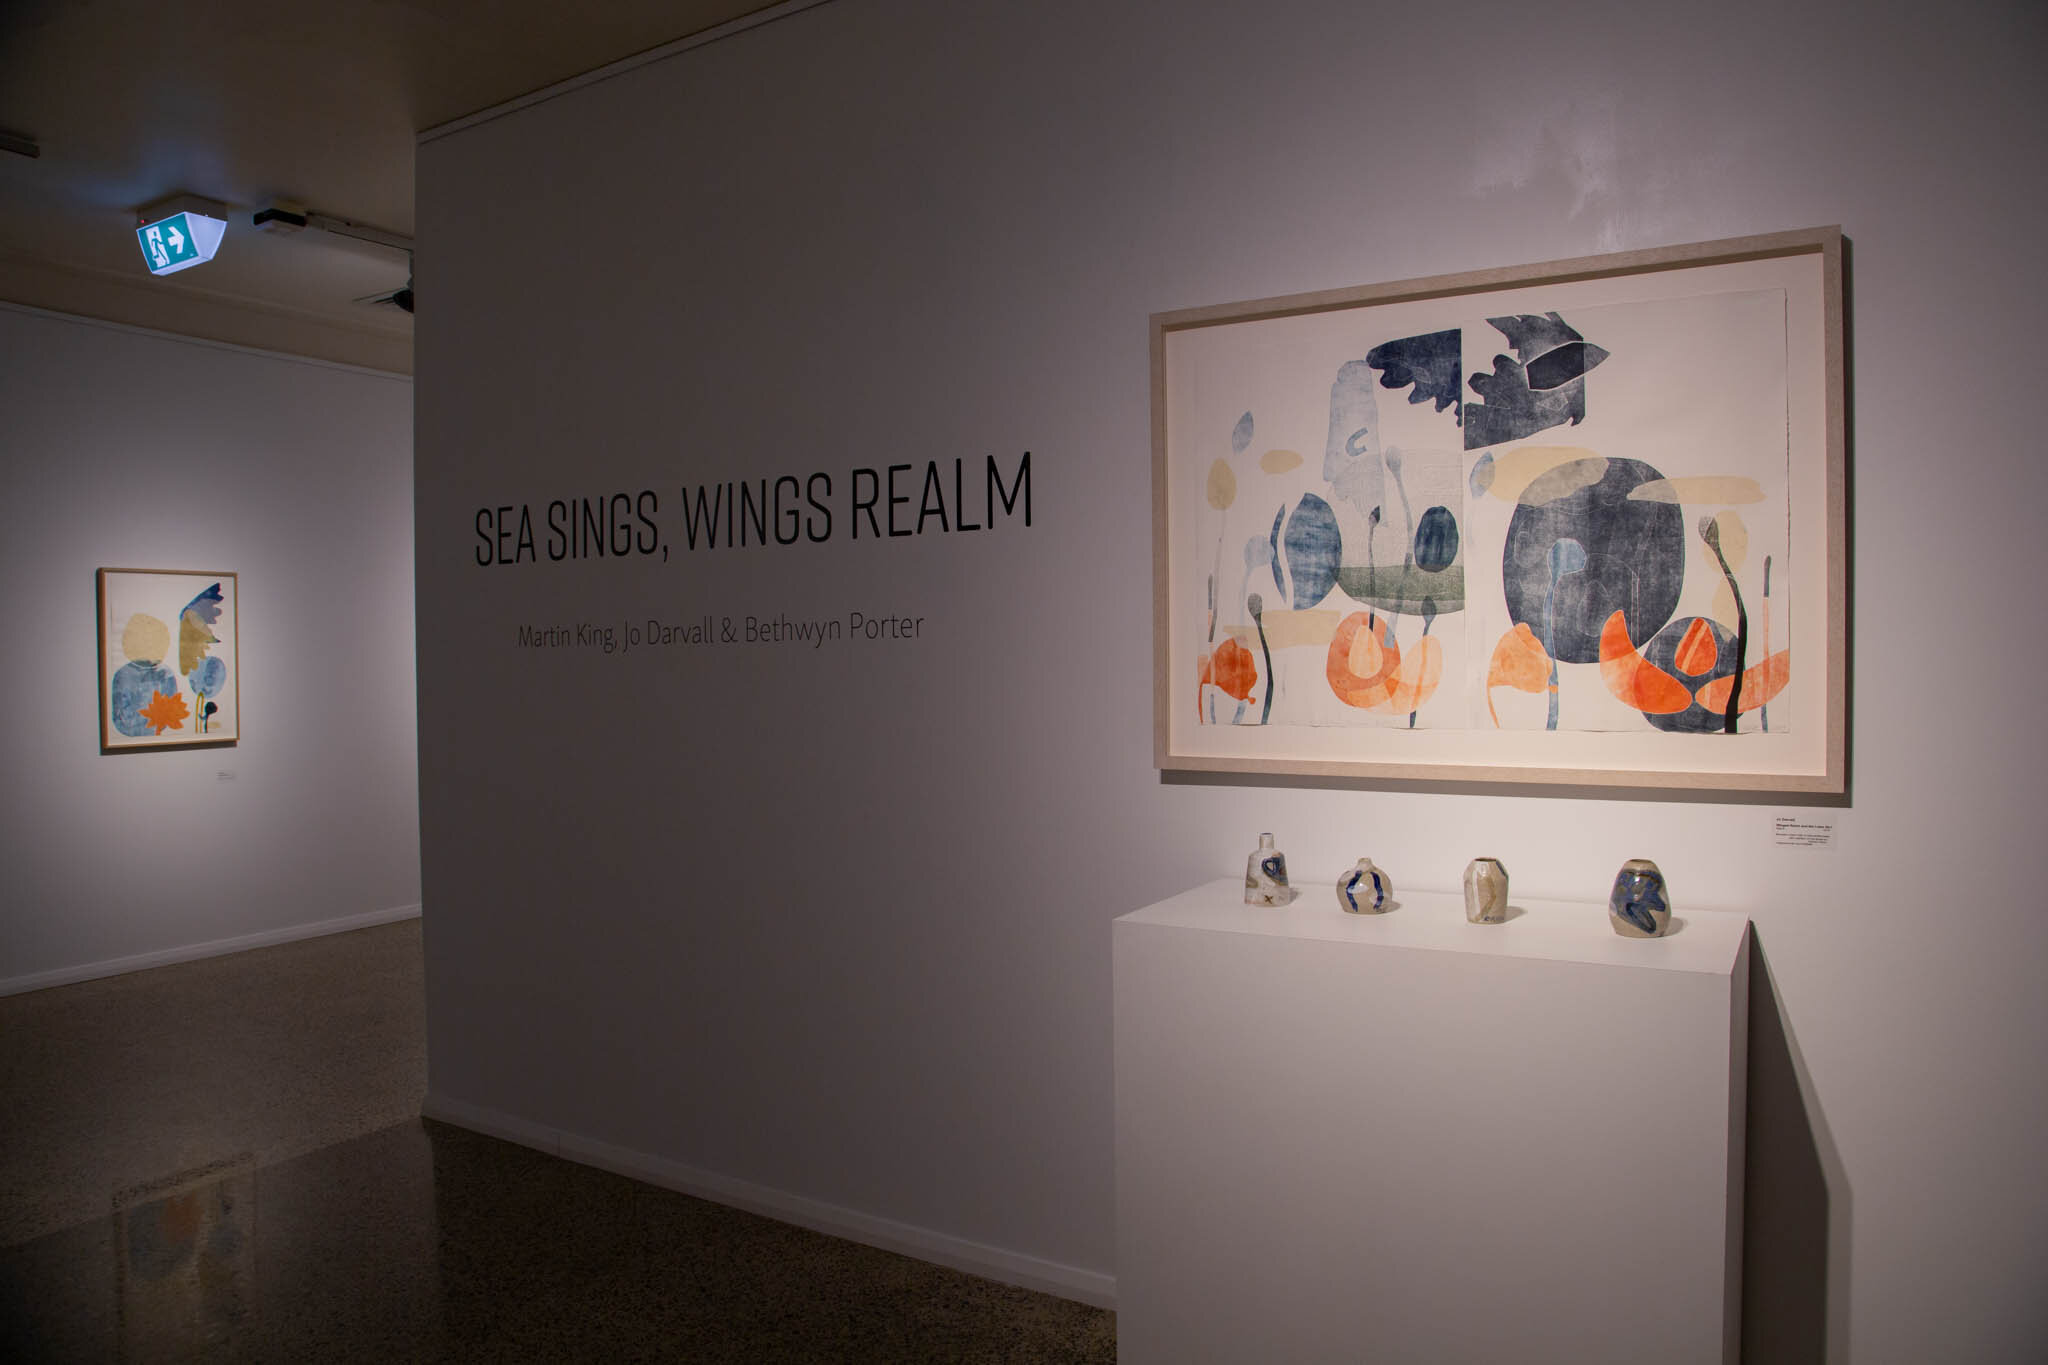   Winged Realm  install Geraldton Regional Art Gallery, Western Australia. Photo: Will Upchurch 